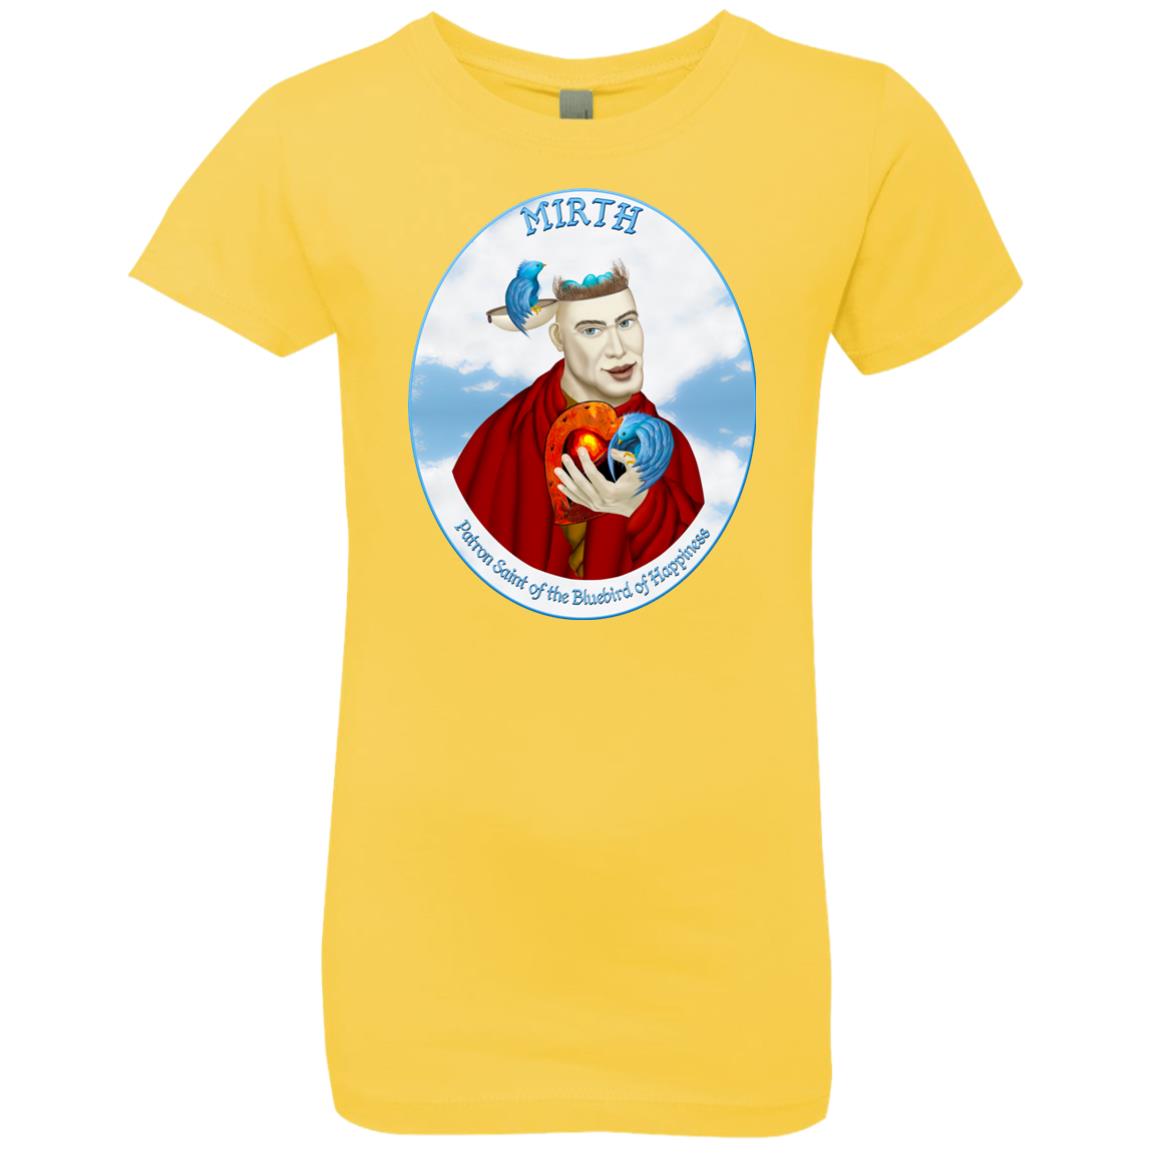 MIRTH - Oval - Girl's Premium Cotton T-Shirt